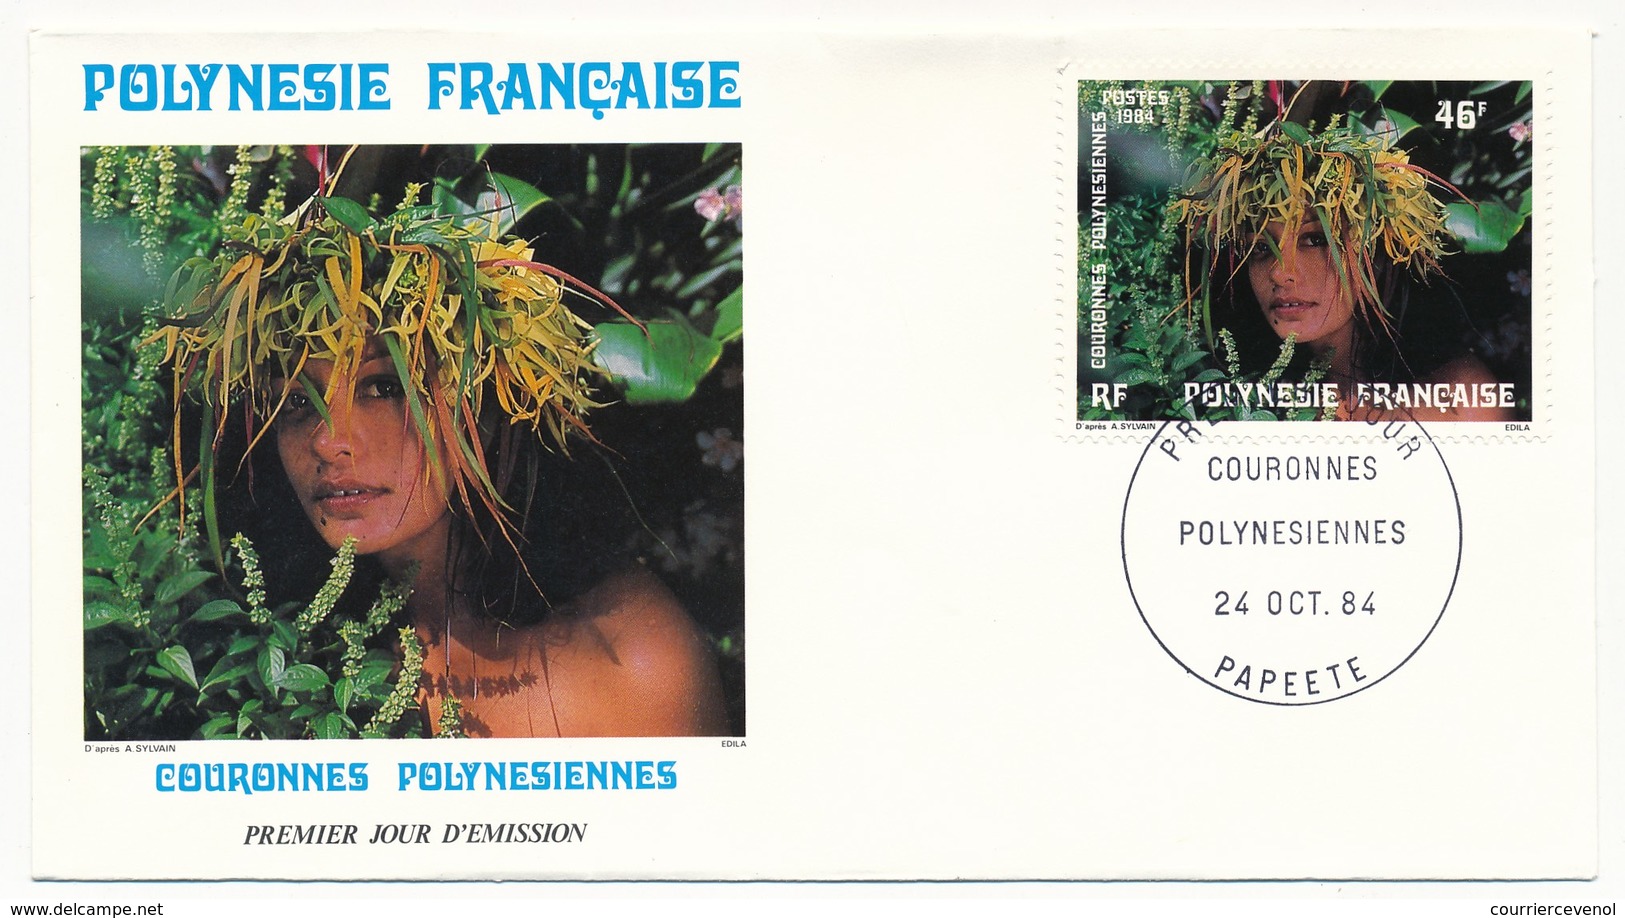 POLYNESIE FRANCAISE - 3 FDC - Couronnes Polynésiennes - 24 Octobre 1984 - Papeete - FDC